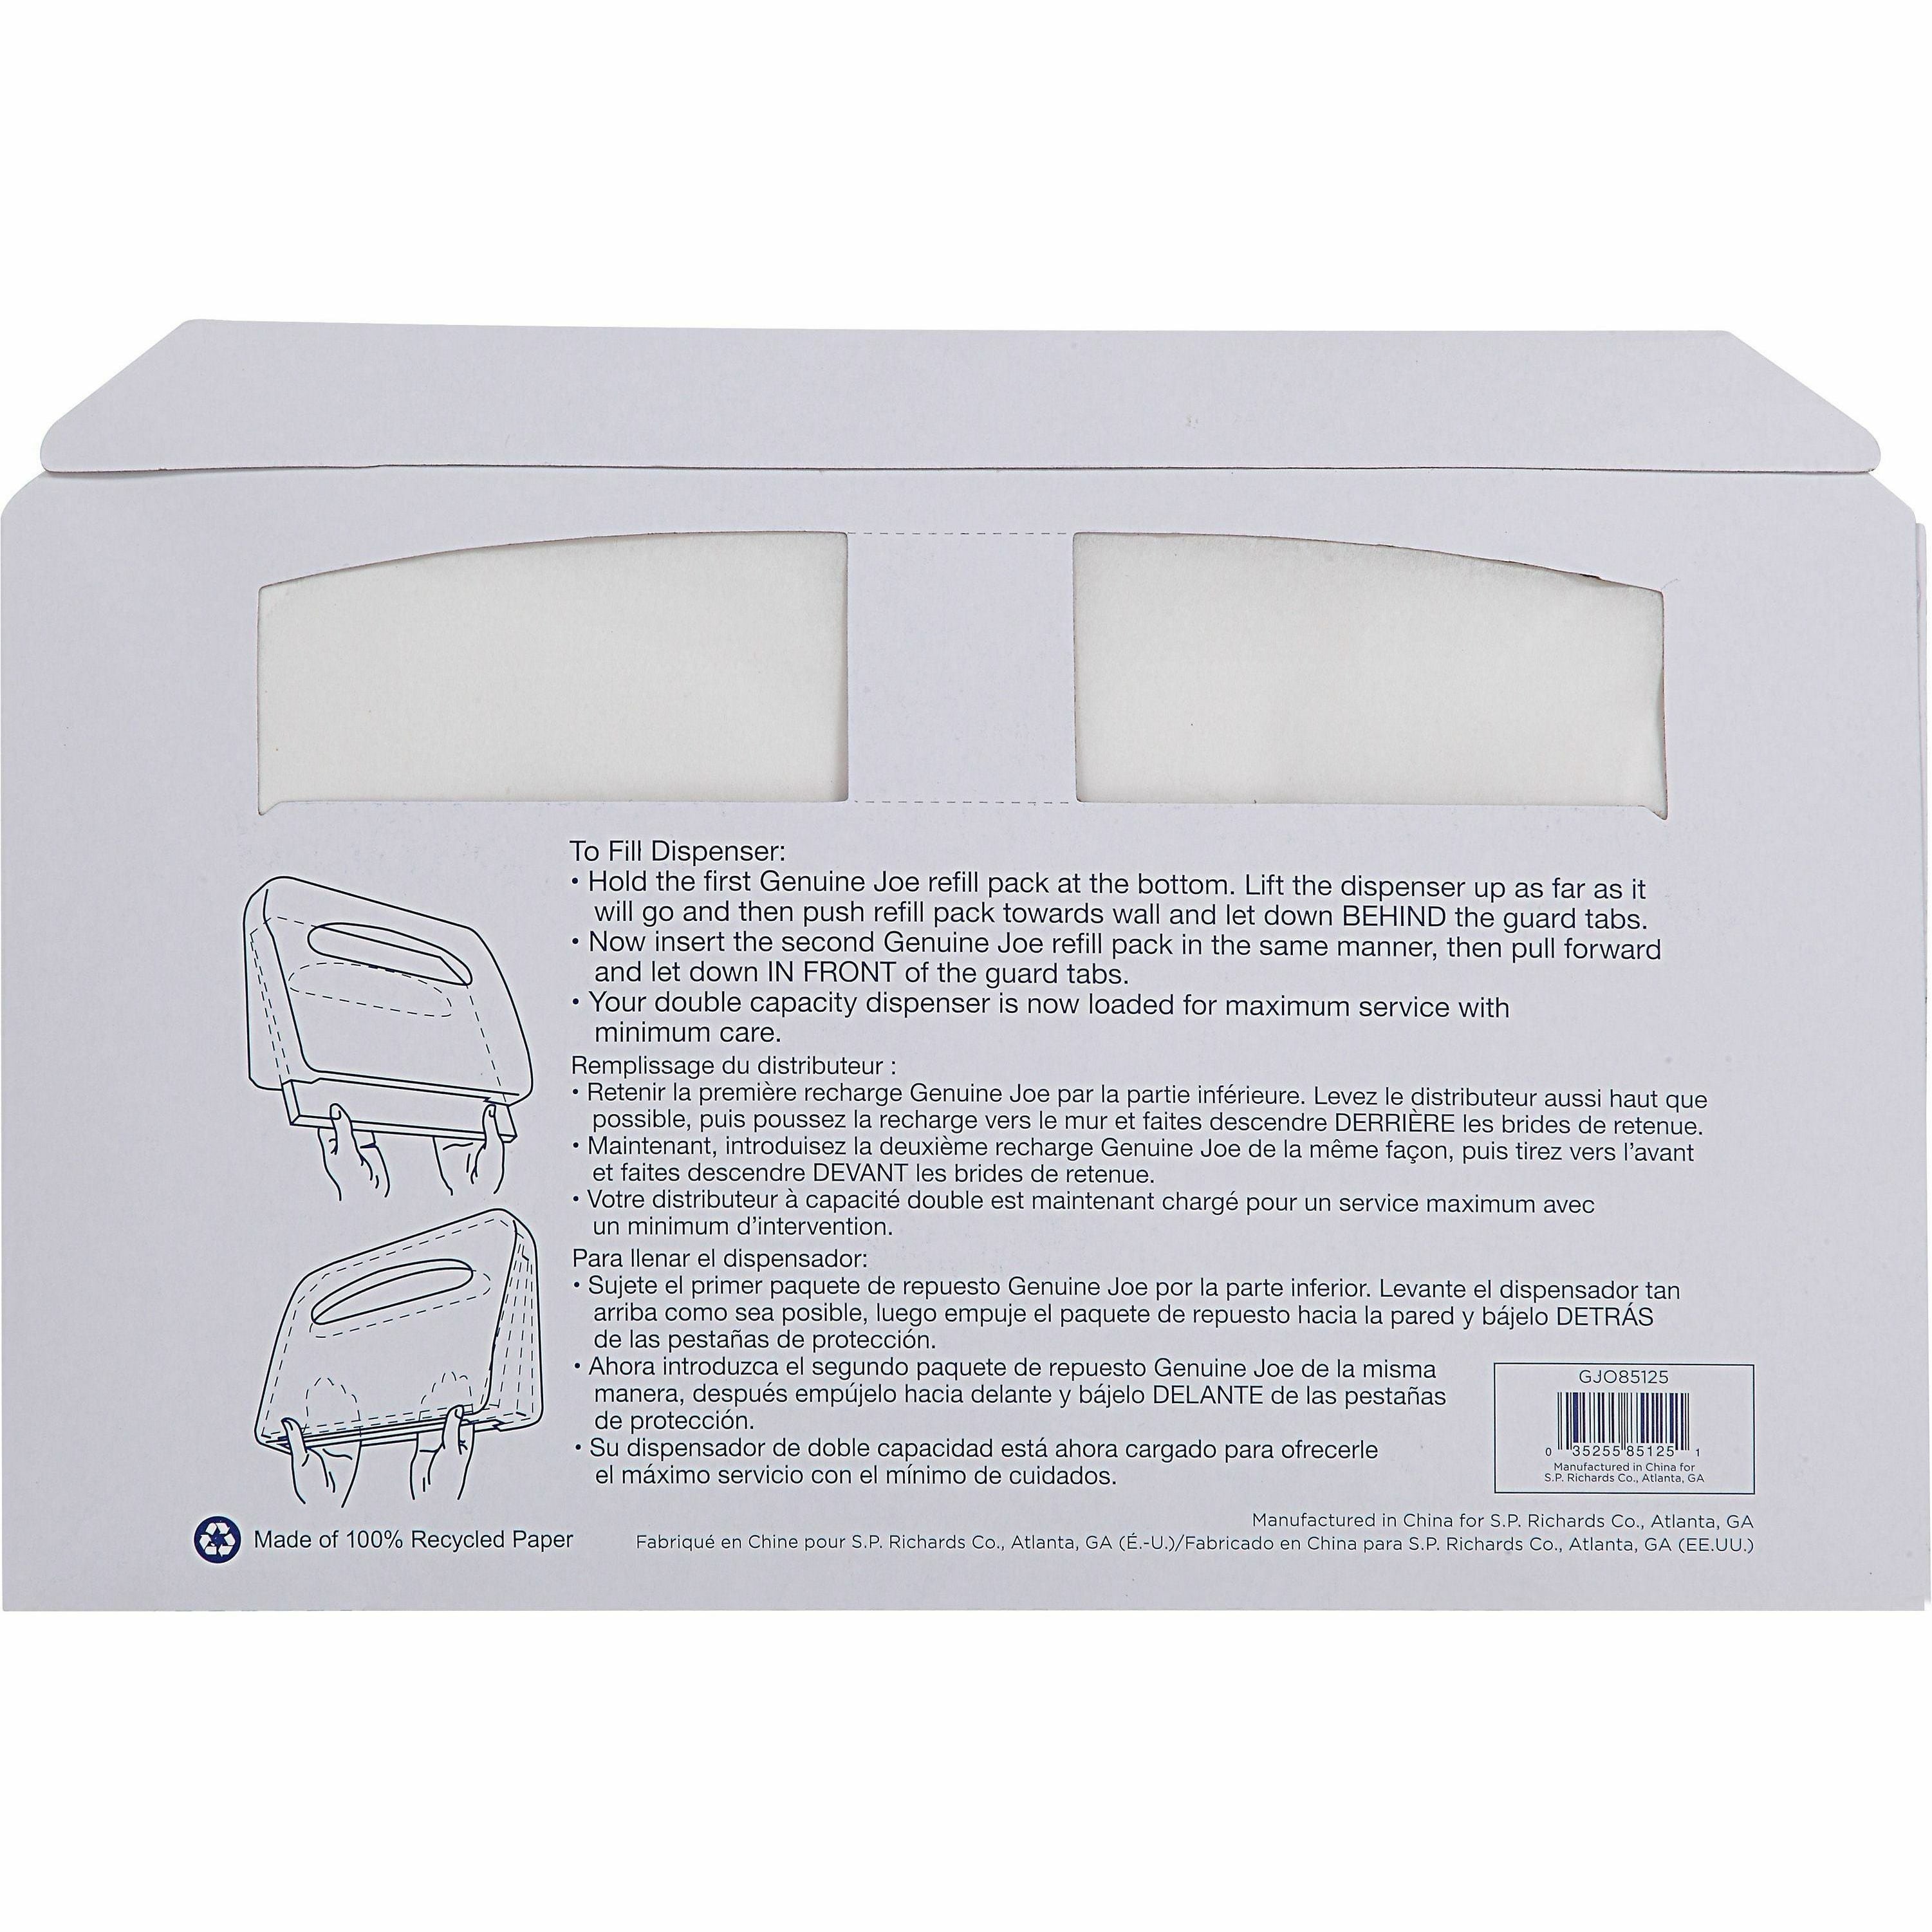 Genuine Joe Toilet Seat Covers - Half-fold - For Public Toilet - 250 / Pack - 20 / Carton - White - 